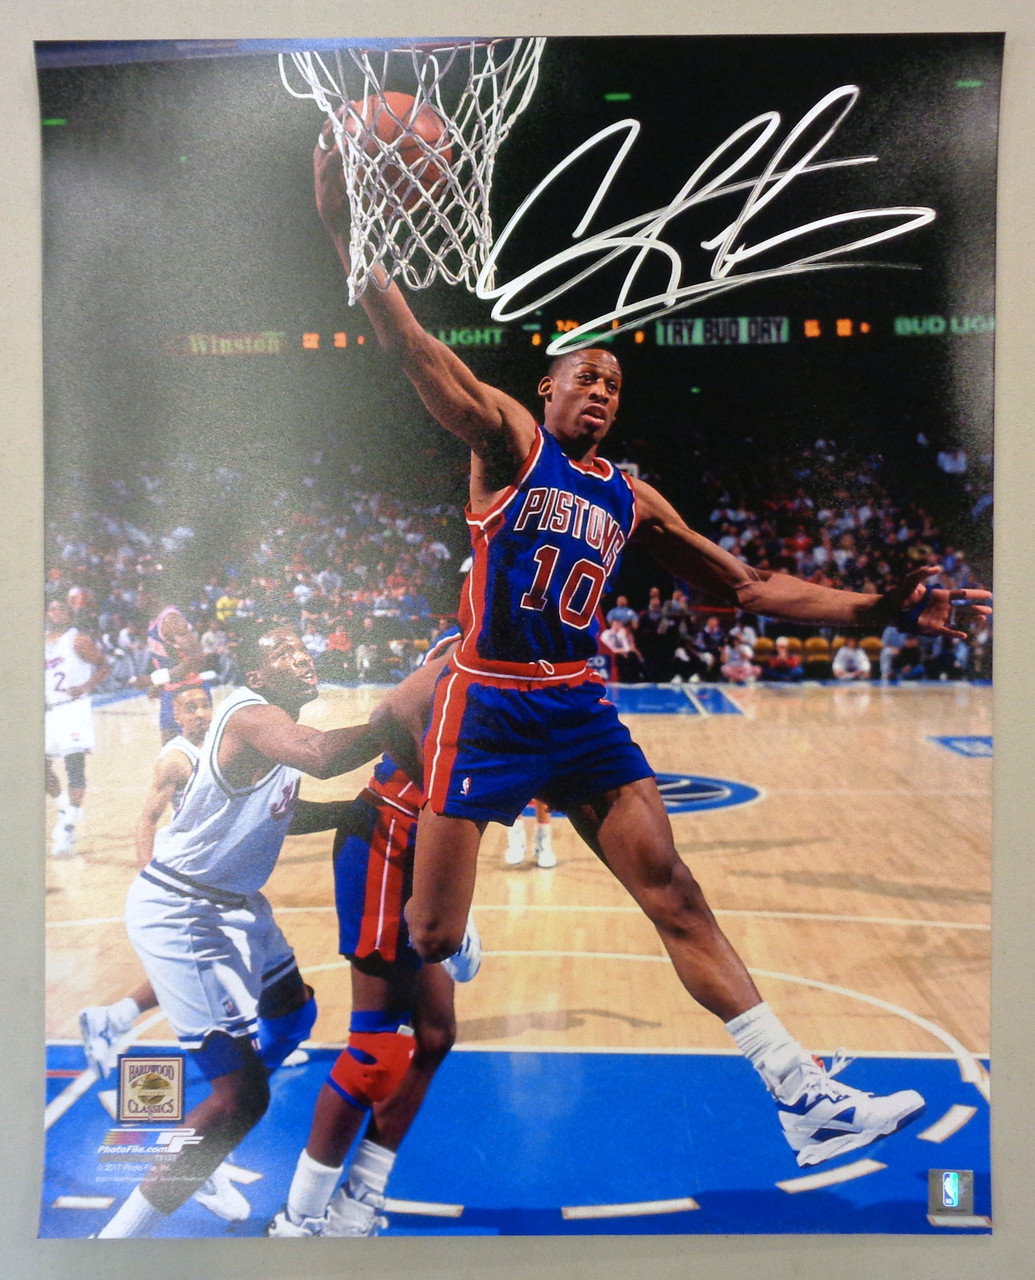 Fanatics Authentic Certified Framed Dennis Rodman Detroit Pistons Autographed 16 x 20 Dunking Photograph 